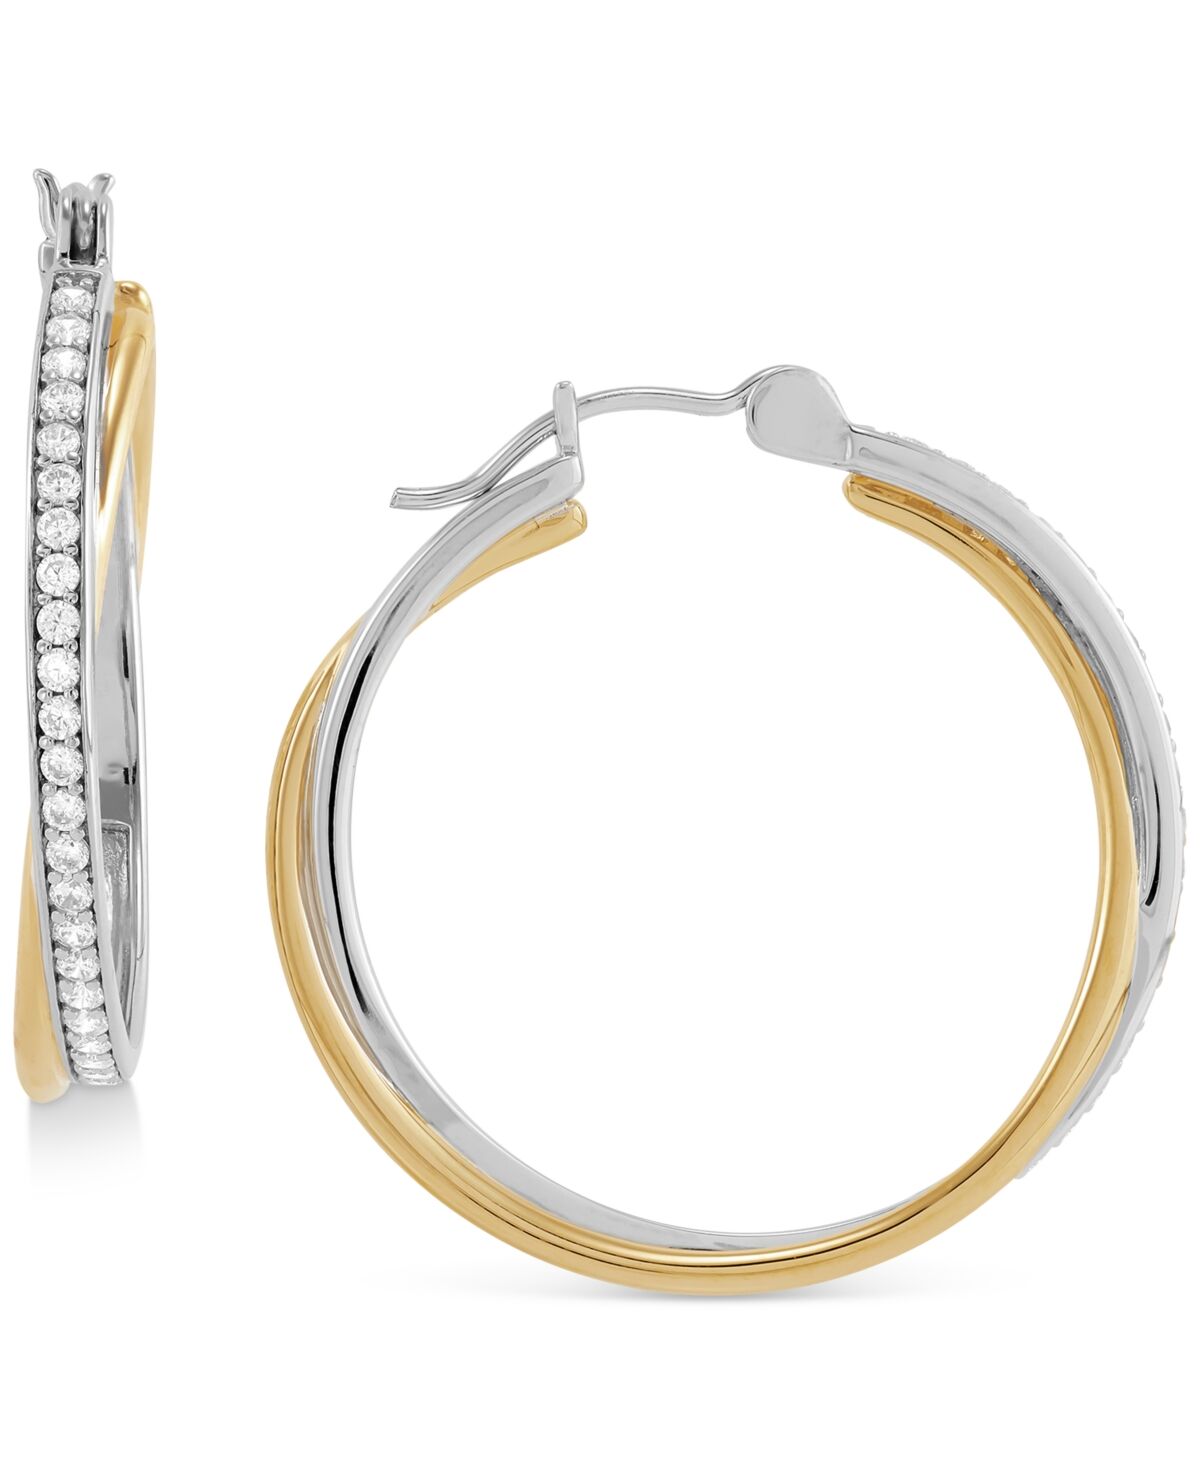 Macy's Cubic Zirconia Twist Medium Hoop Earrings in Sterling Silver & 14k Gold-Plate, 1.25